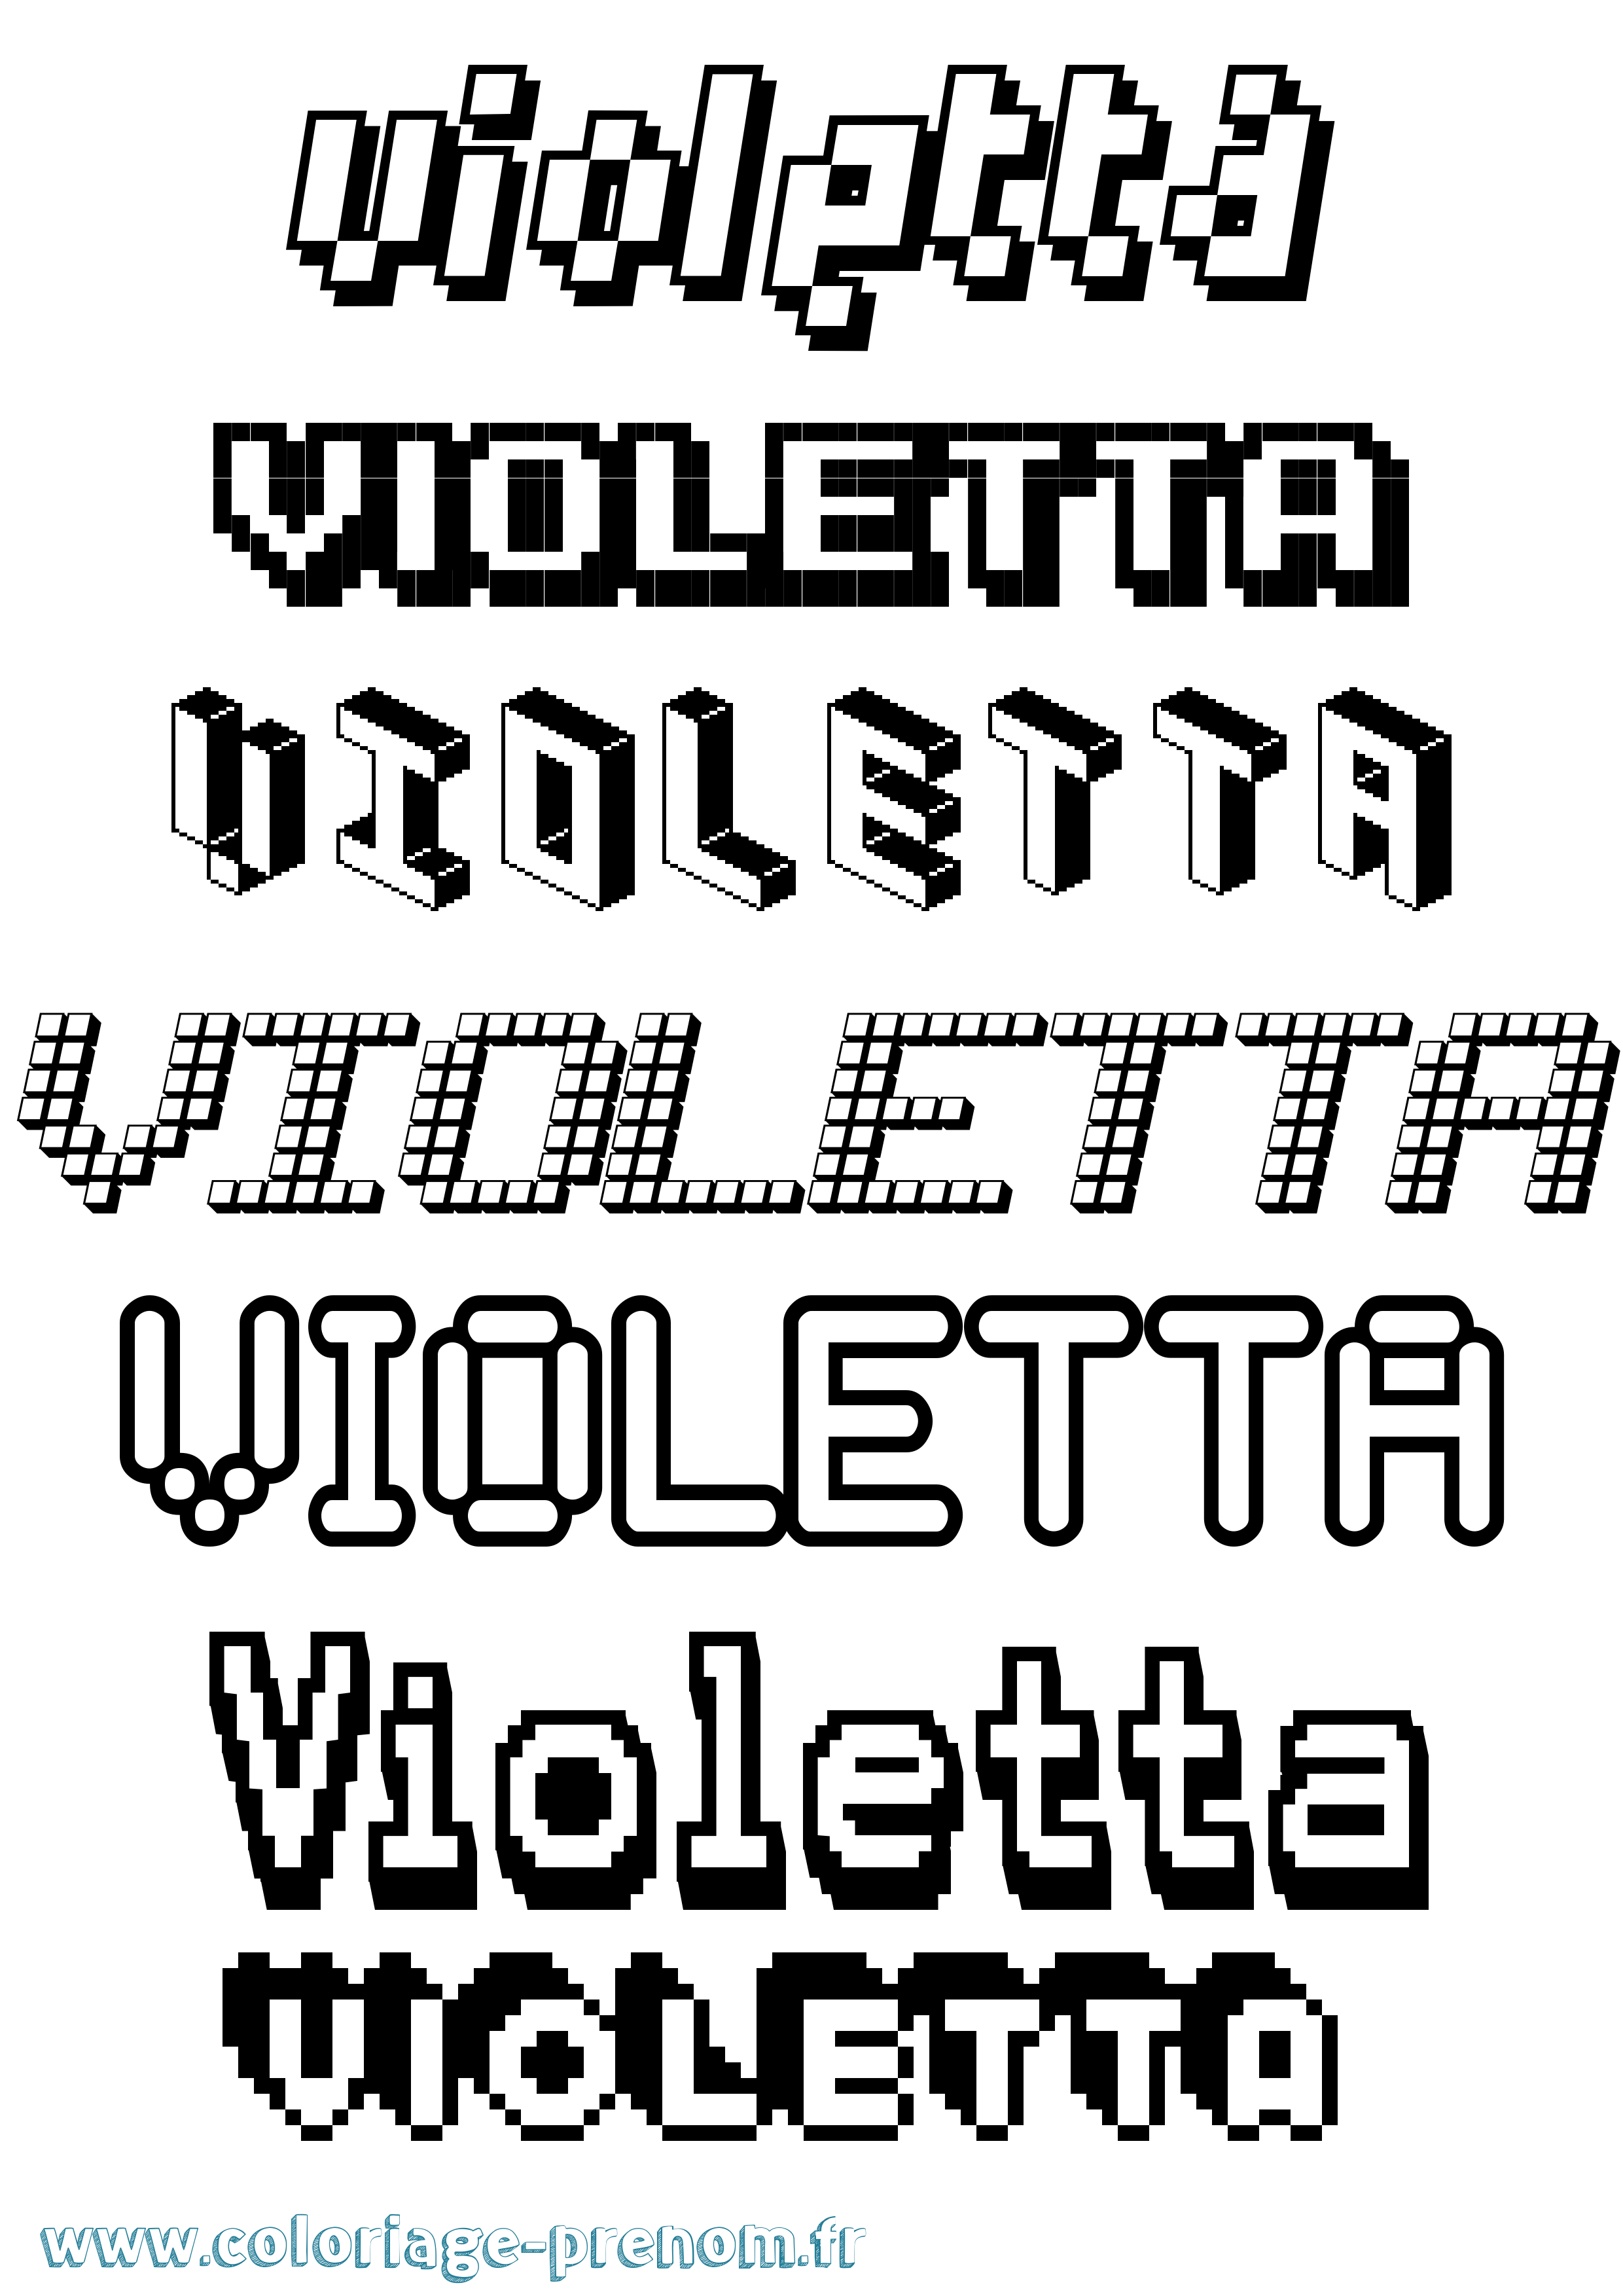 Coloriage prénom Violetta Pixel